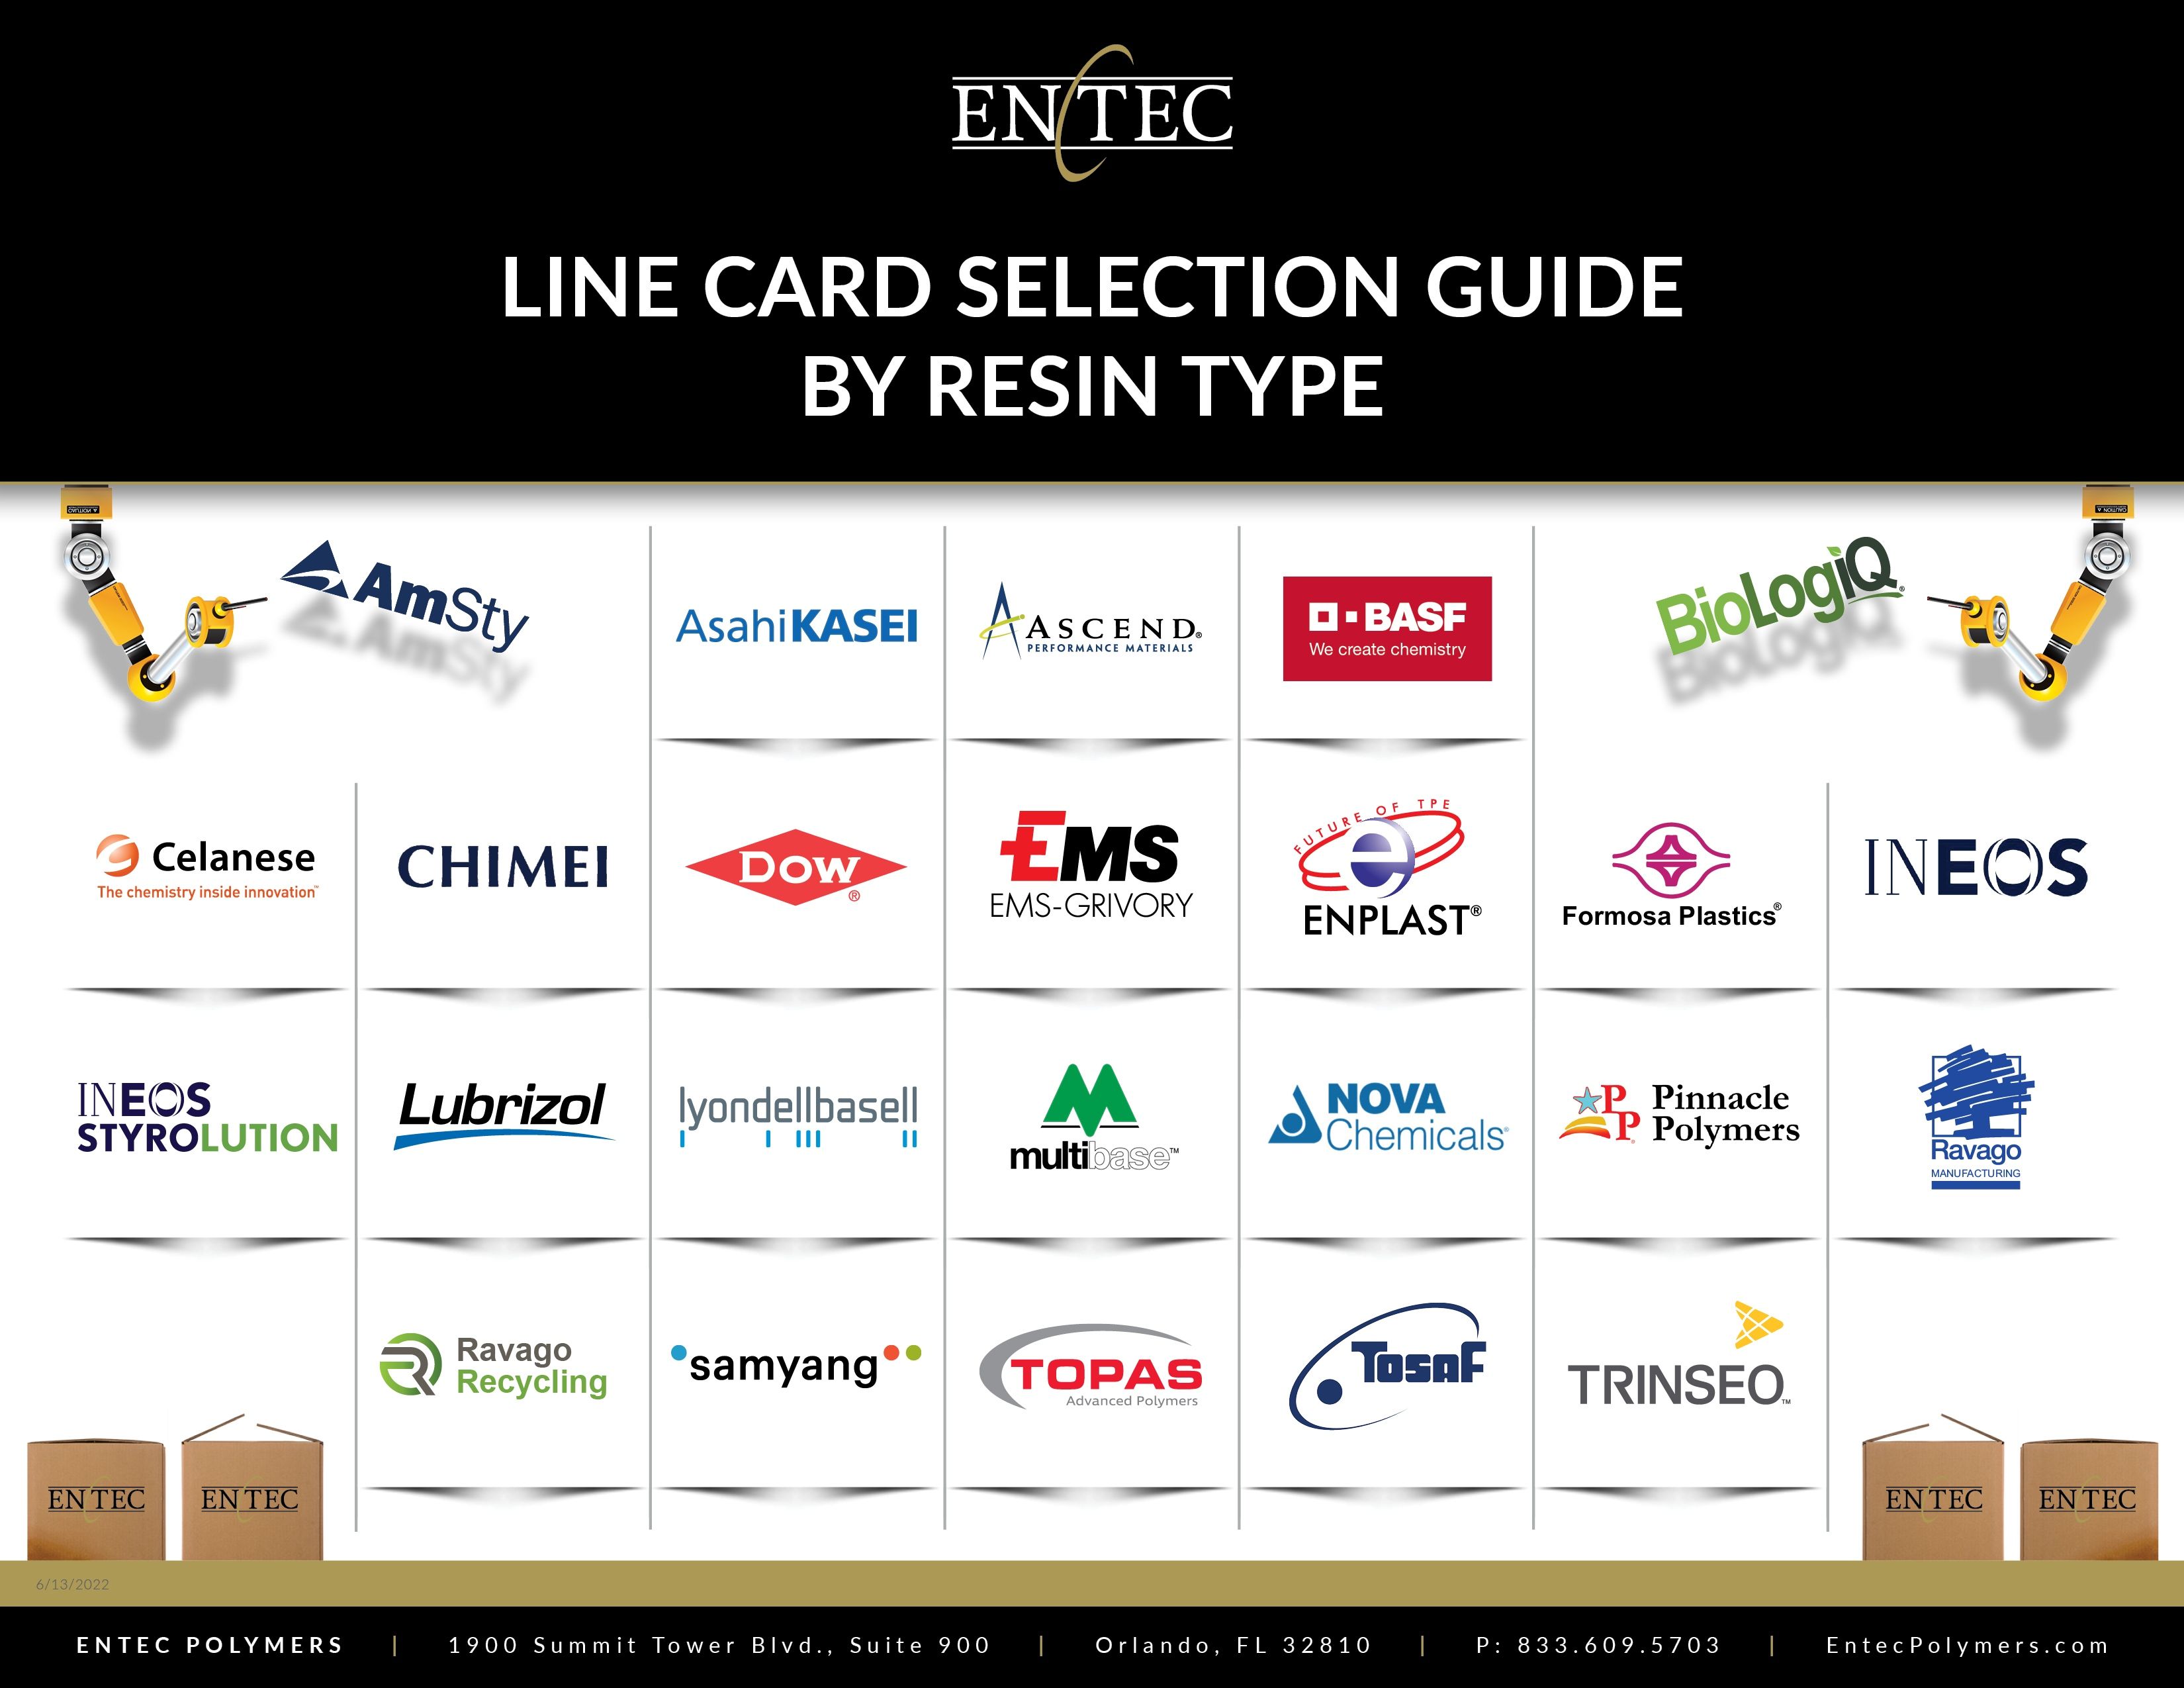 https://ik.imagekit.io/v2onc6i6hiu/images/Line-Card-Selection-Guide-By-Resin-Type-TN.jpg